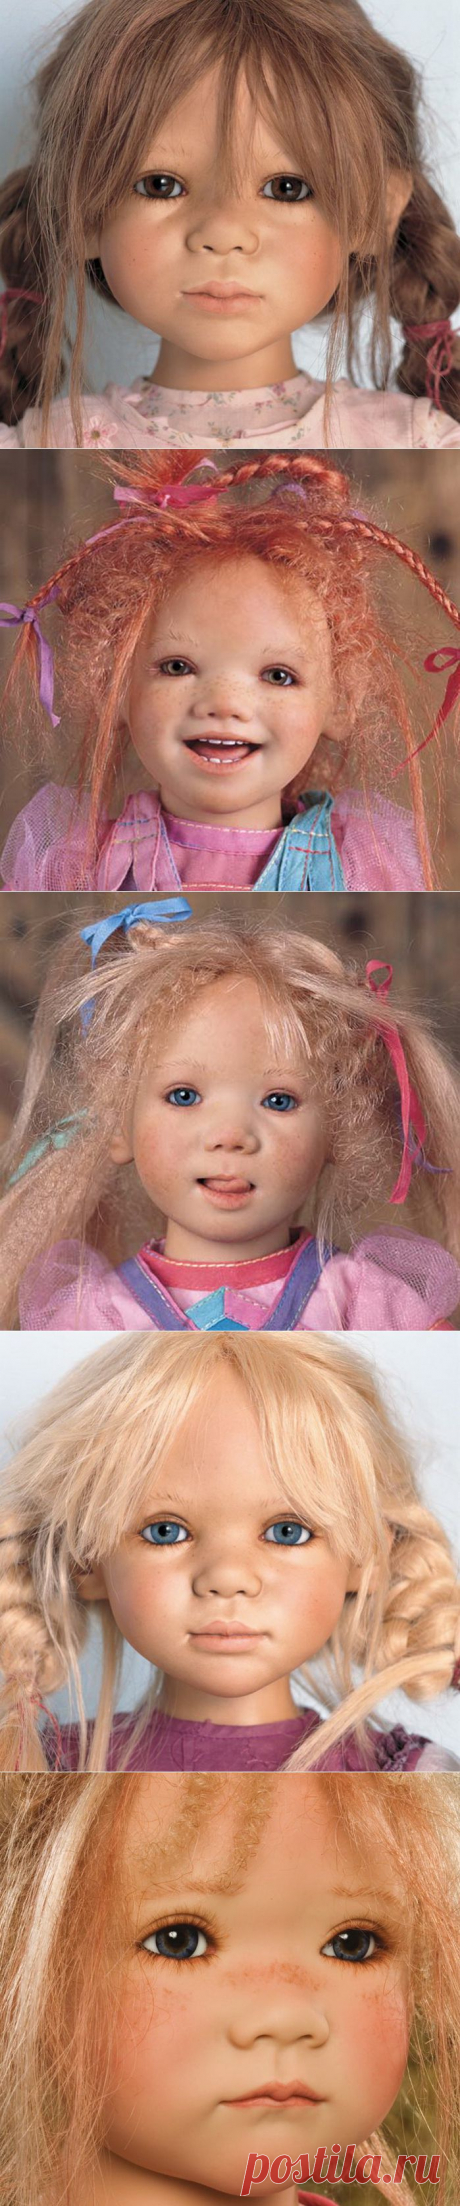 Блоги@Mail.Ru: Коллекционные куклы Annette Himstedt/Частичка детства